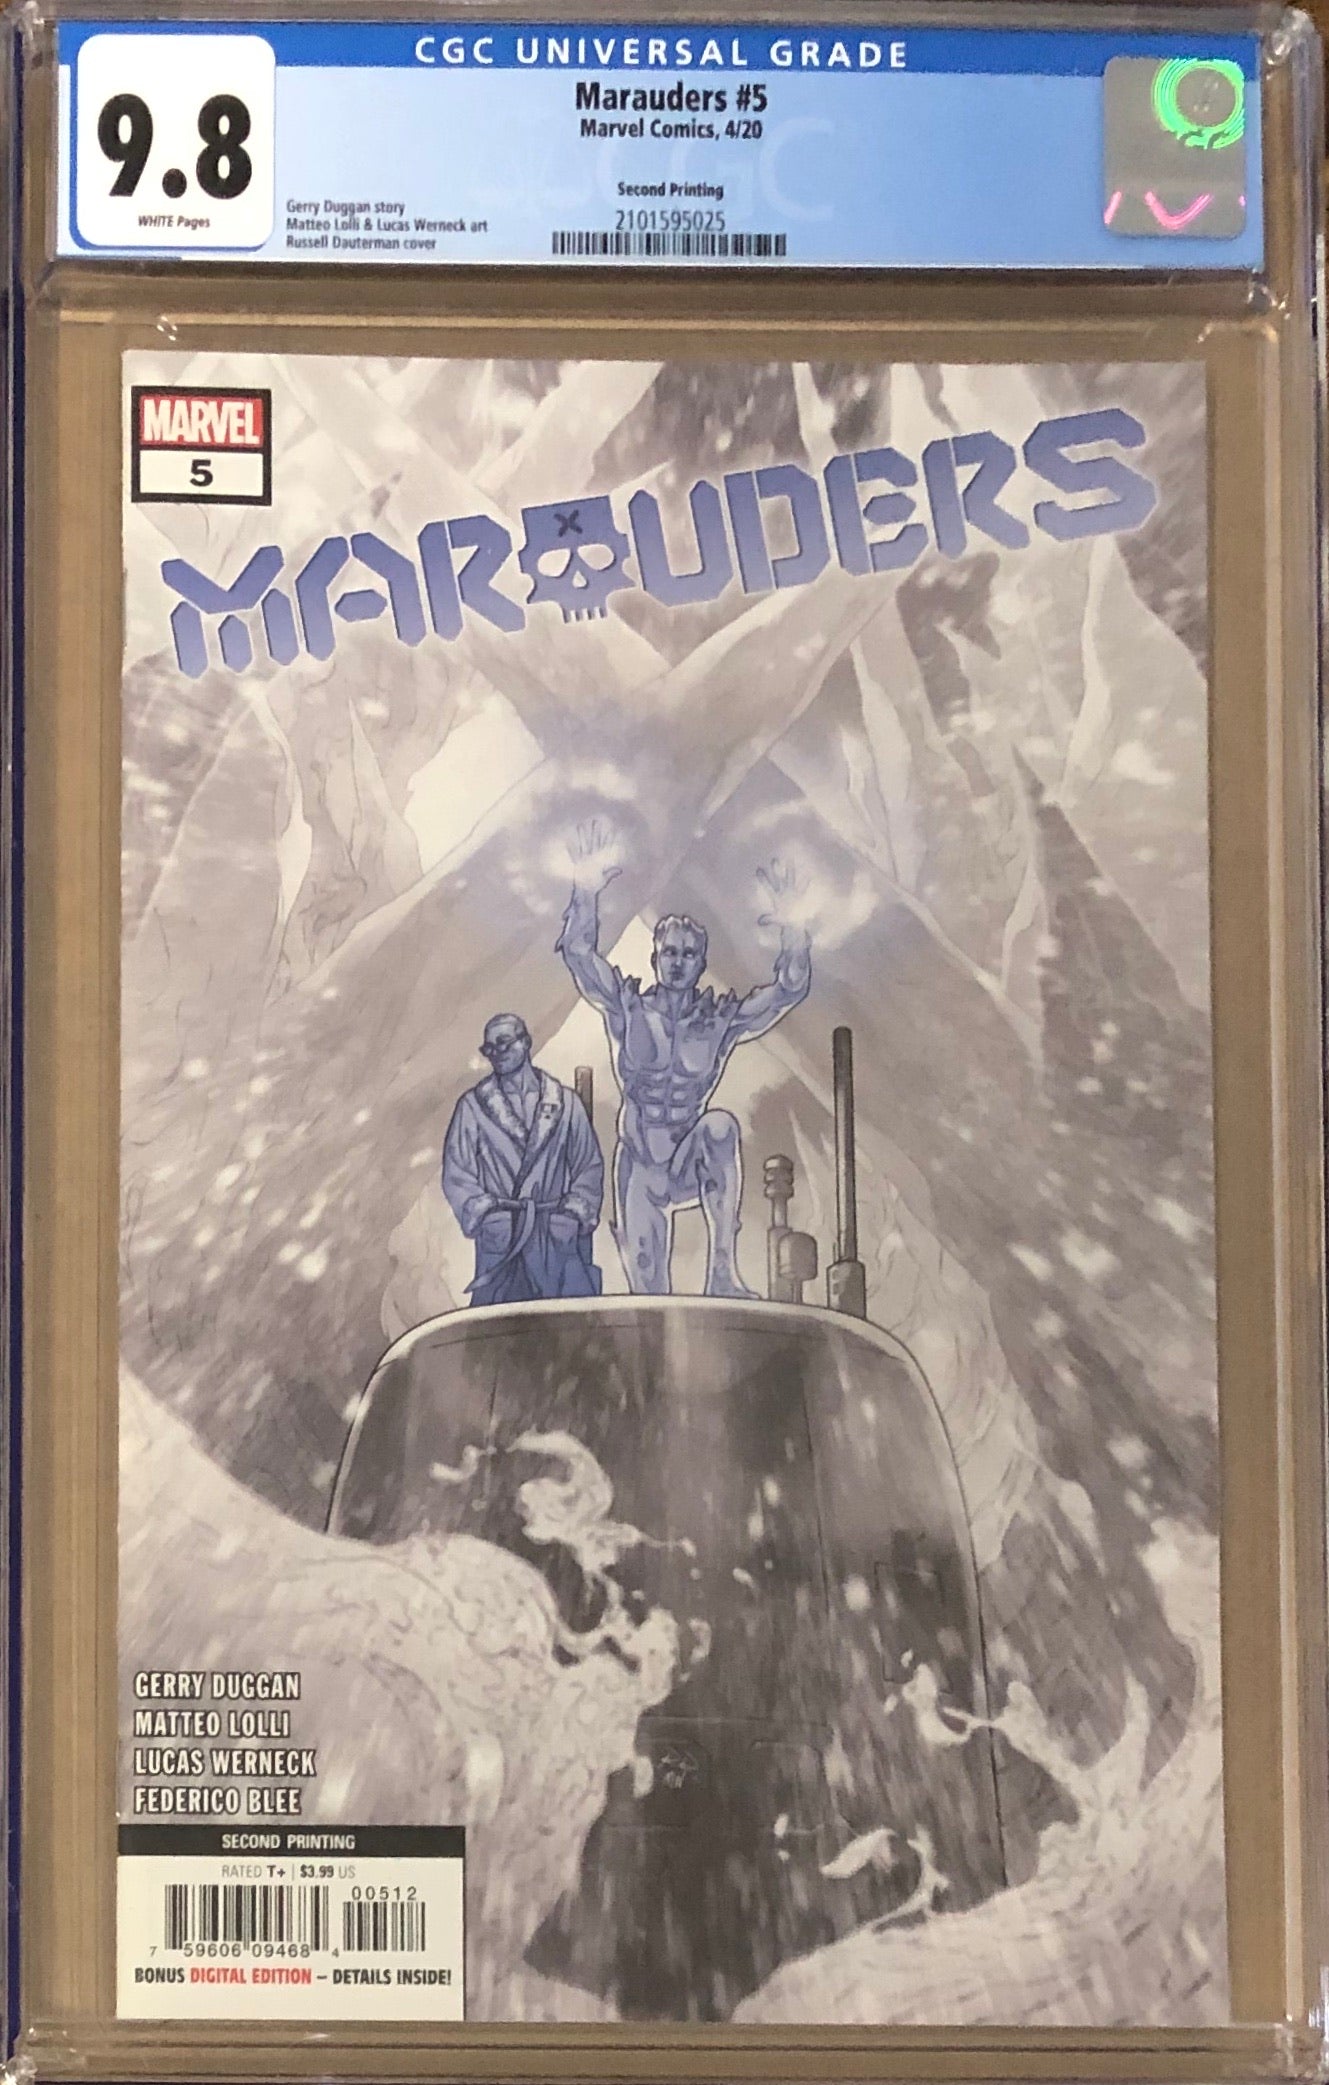 Marauders #5 Second Printing CGC 9.8 - Dawn of X!